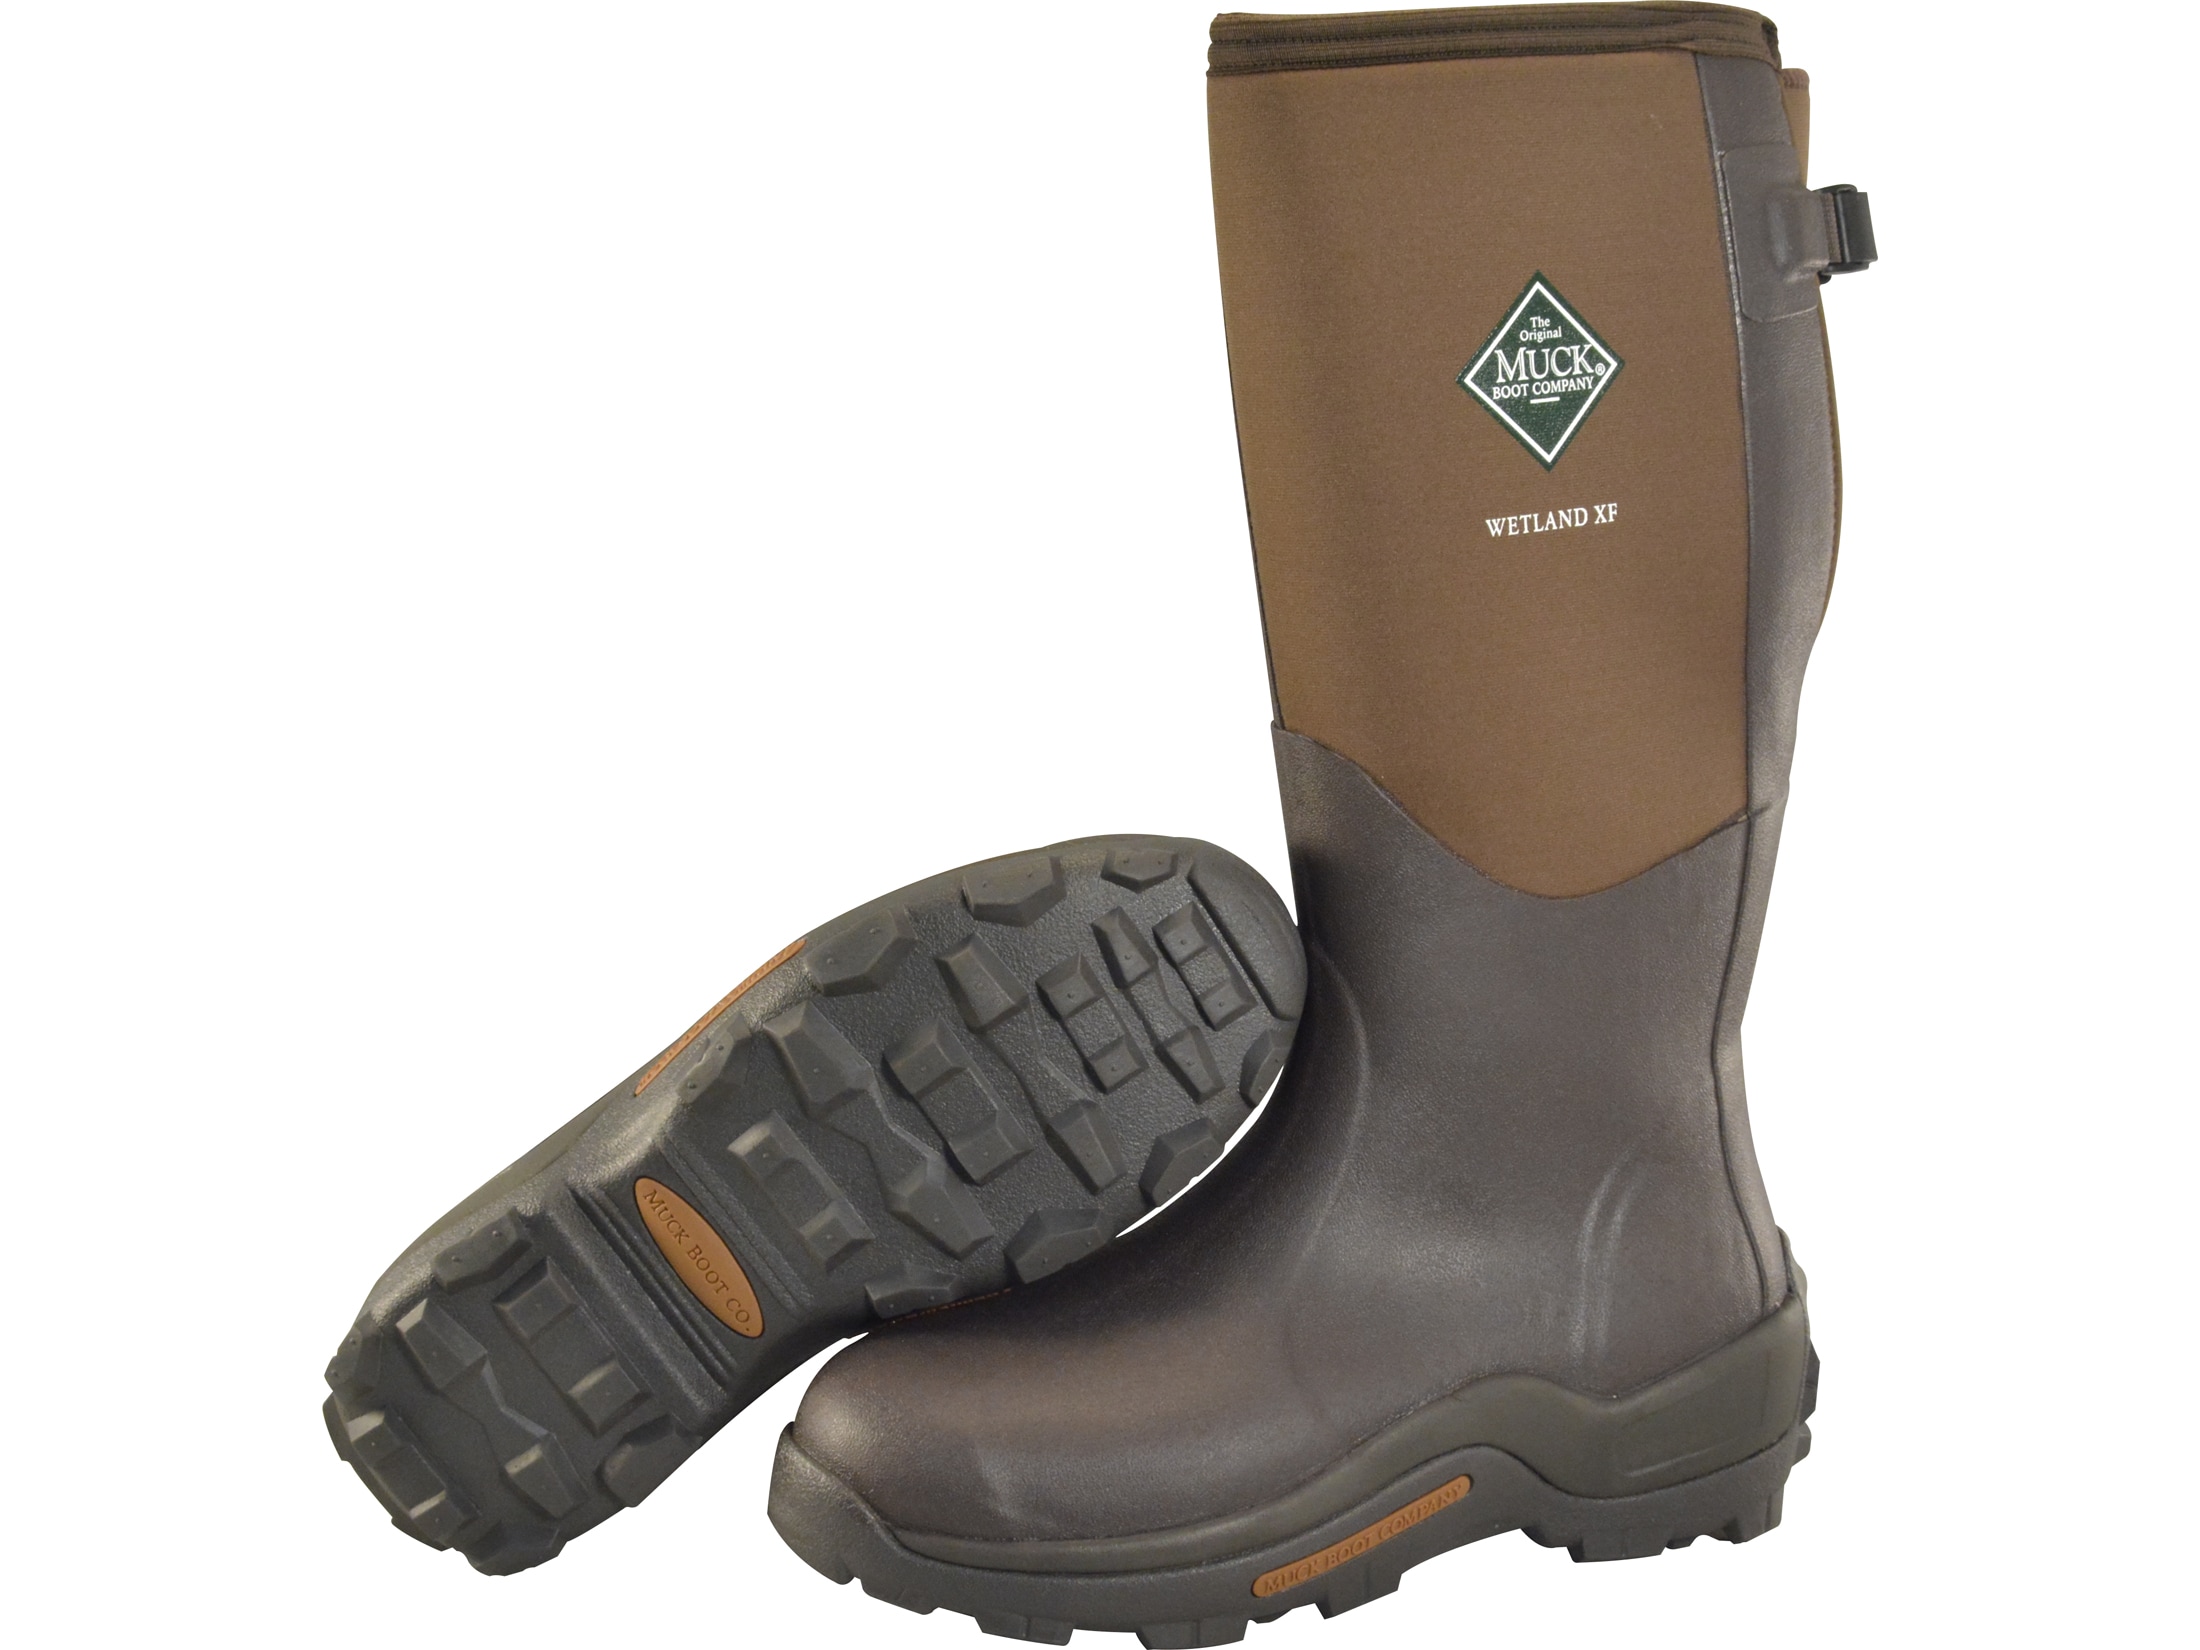 Muck Boots Wetland XF 16.5 Hunting Boots Neoprene/Rubber Bark Men's 9